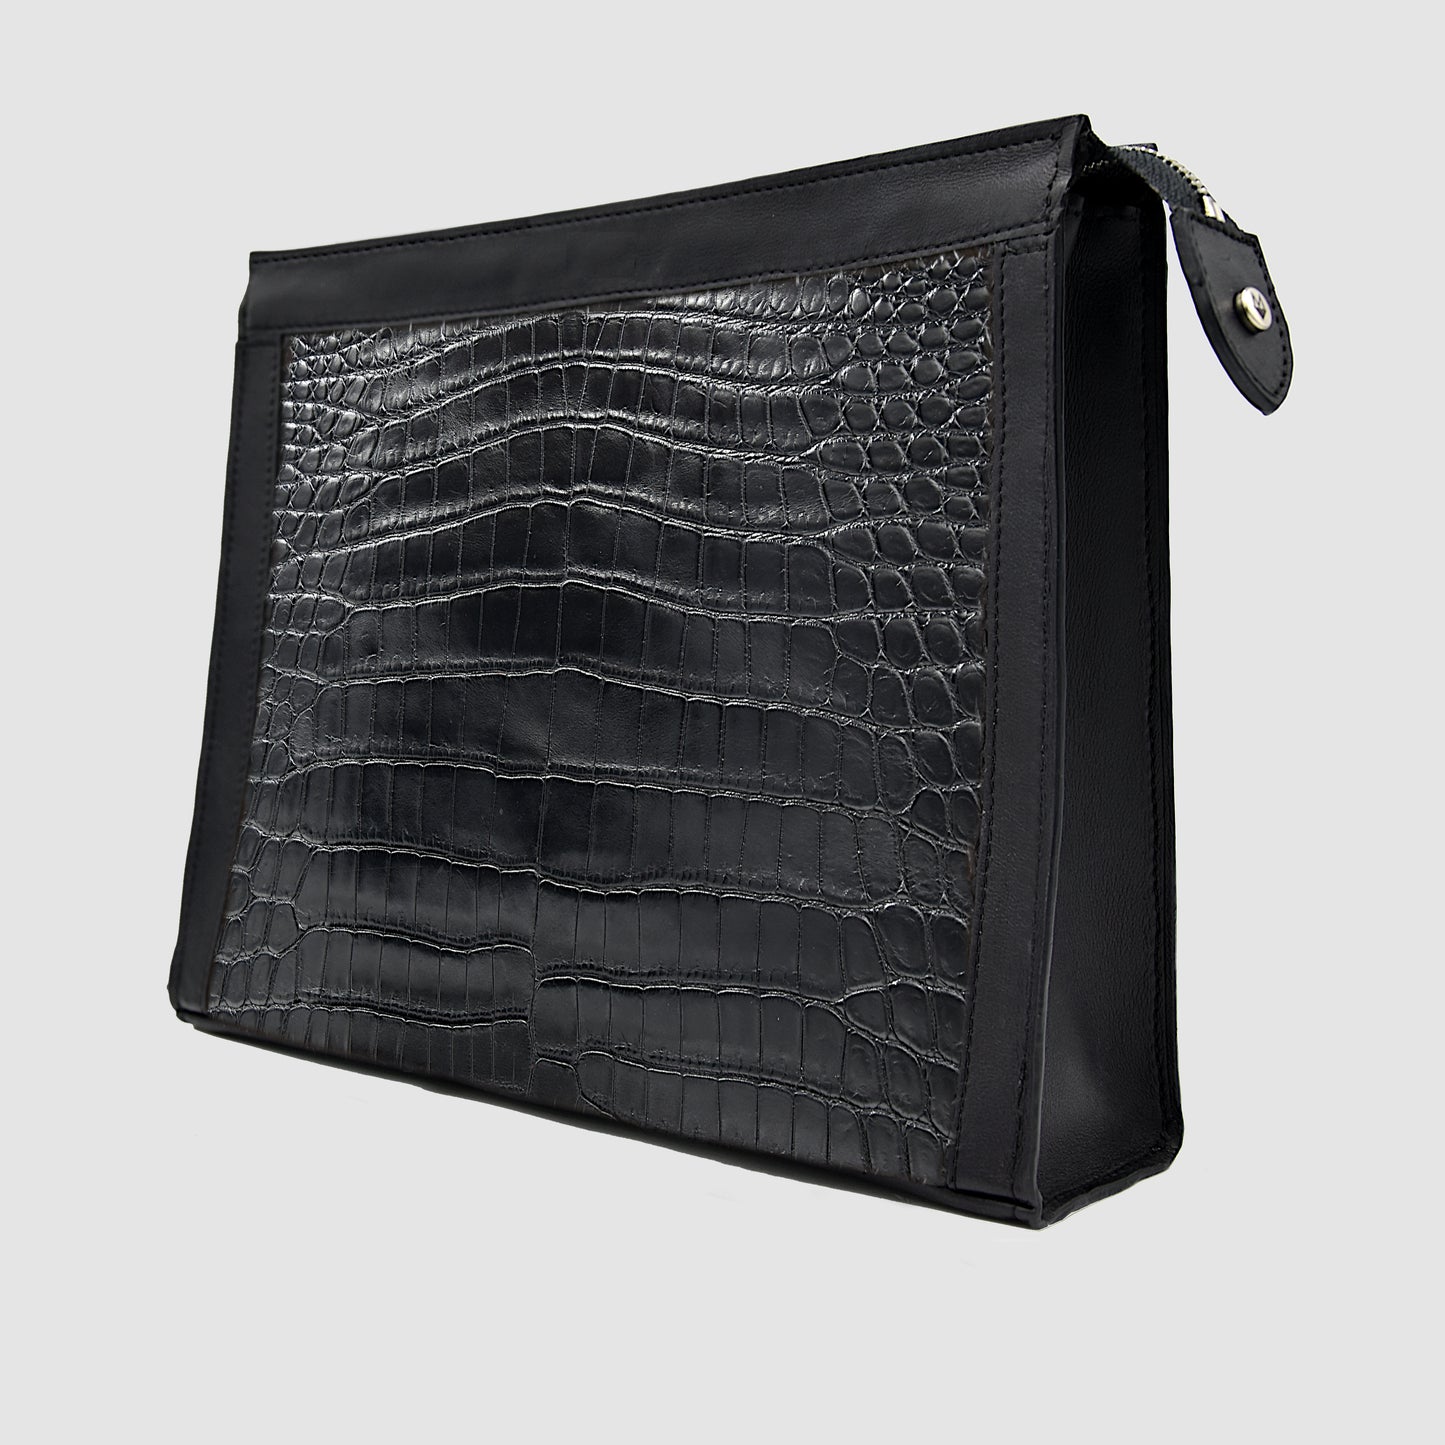 Man Purse Clutch bag in full genuine Black Crocodile skin